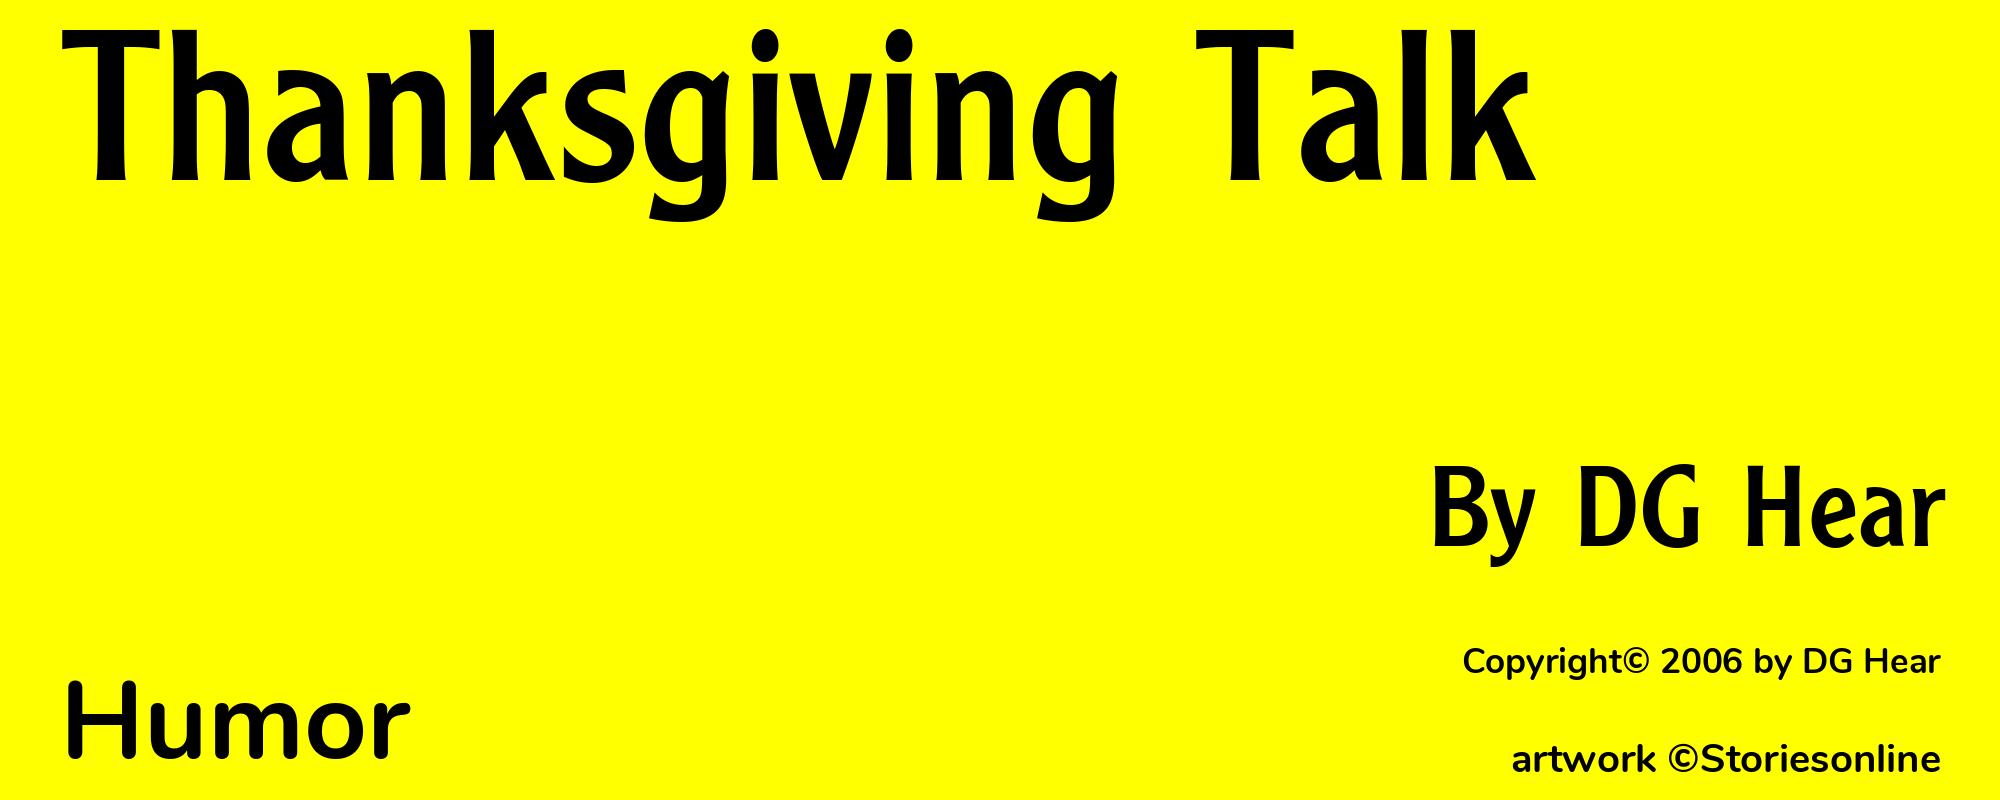 Thanksgiving Talk - Cover